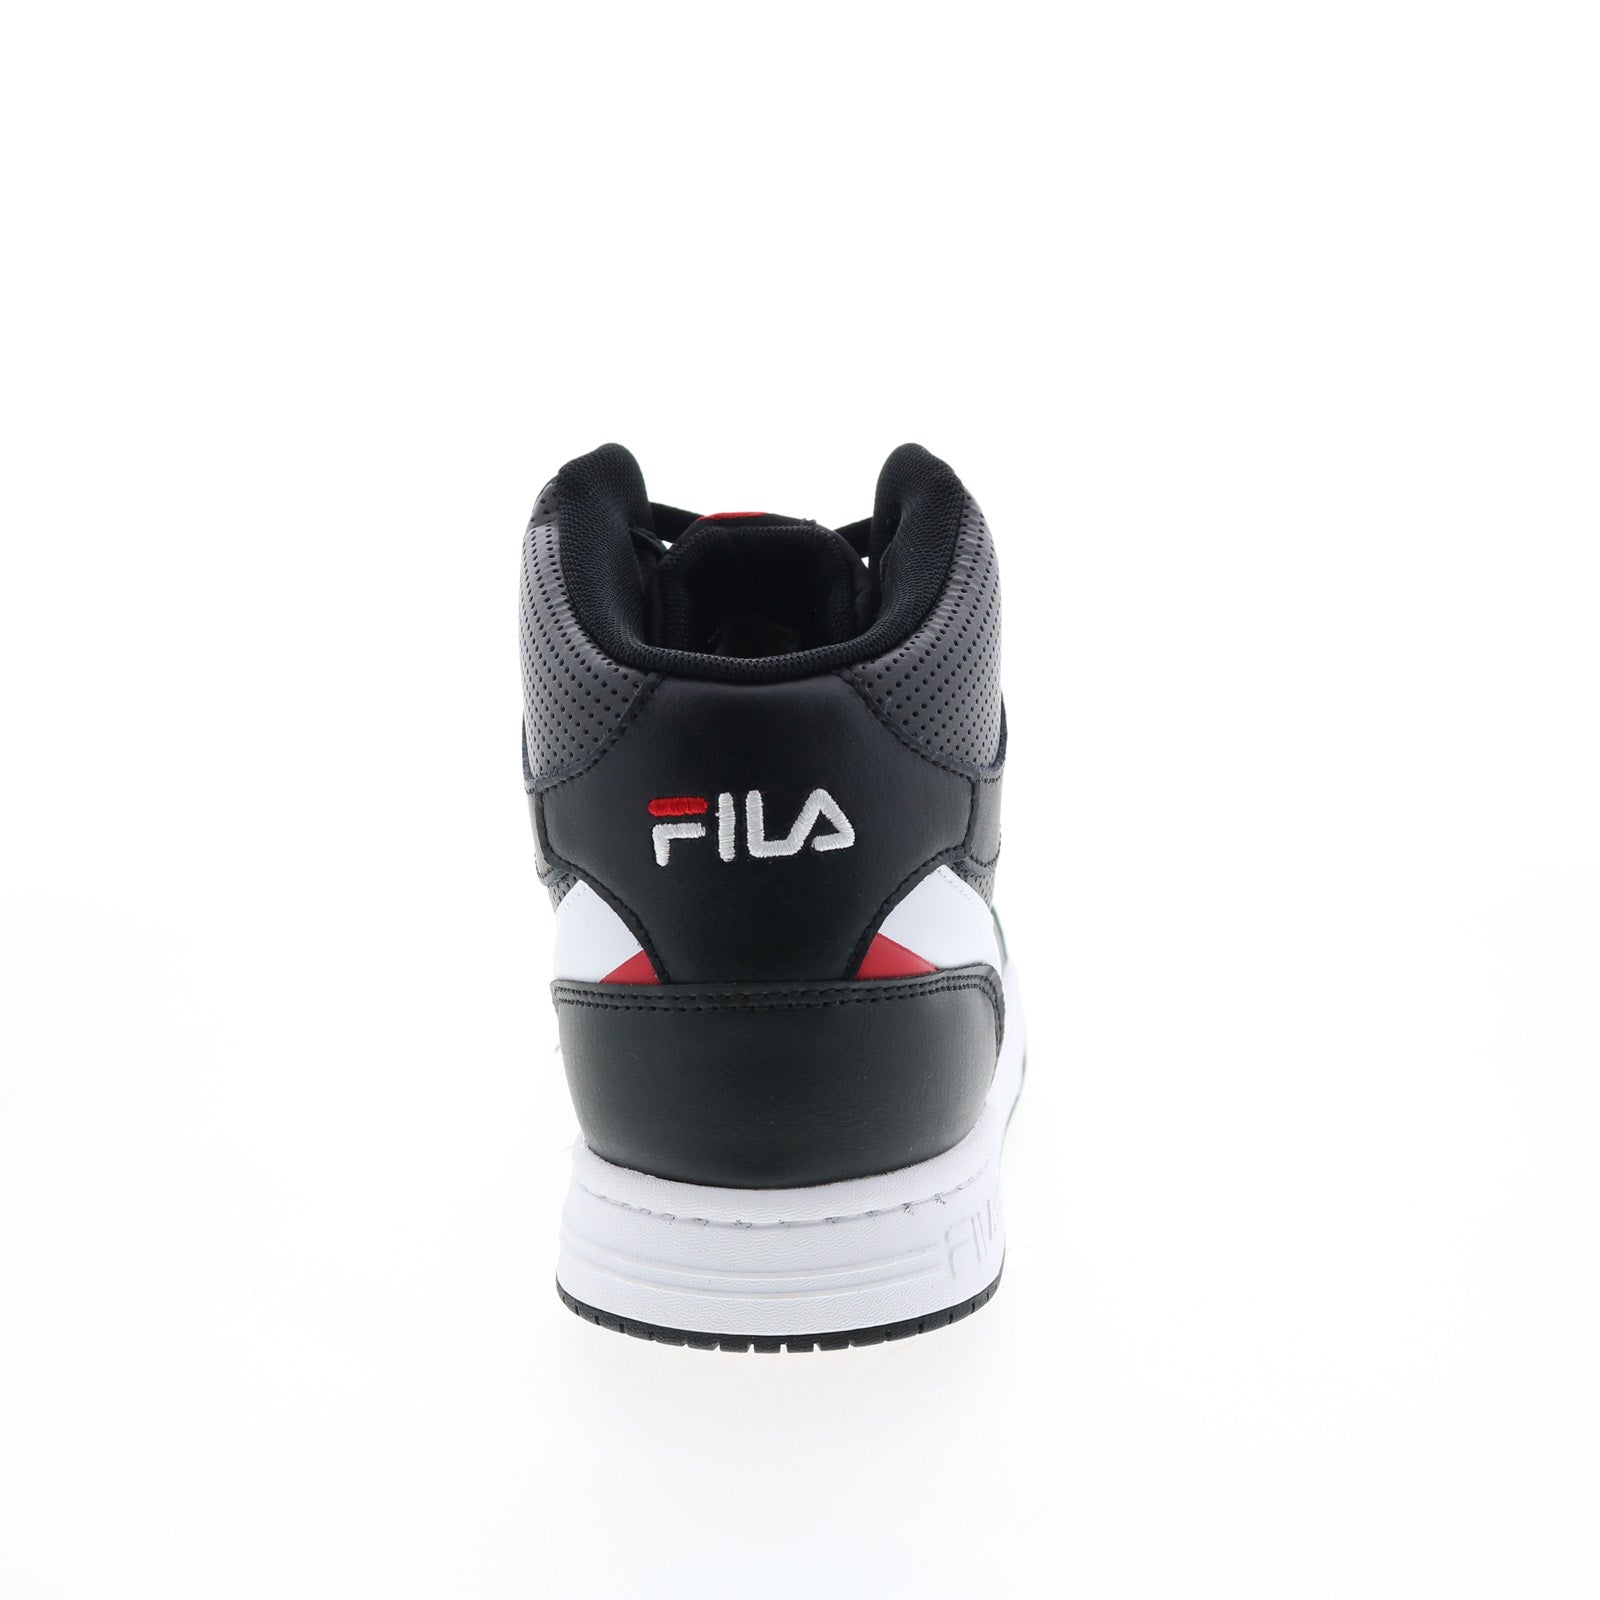 FILA FX-100 MID SNEAKERS IN BLACK - BLACK. #fila #shoes # | Sneakers,  Vintage sneakers, Sneakers men